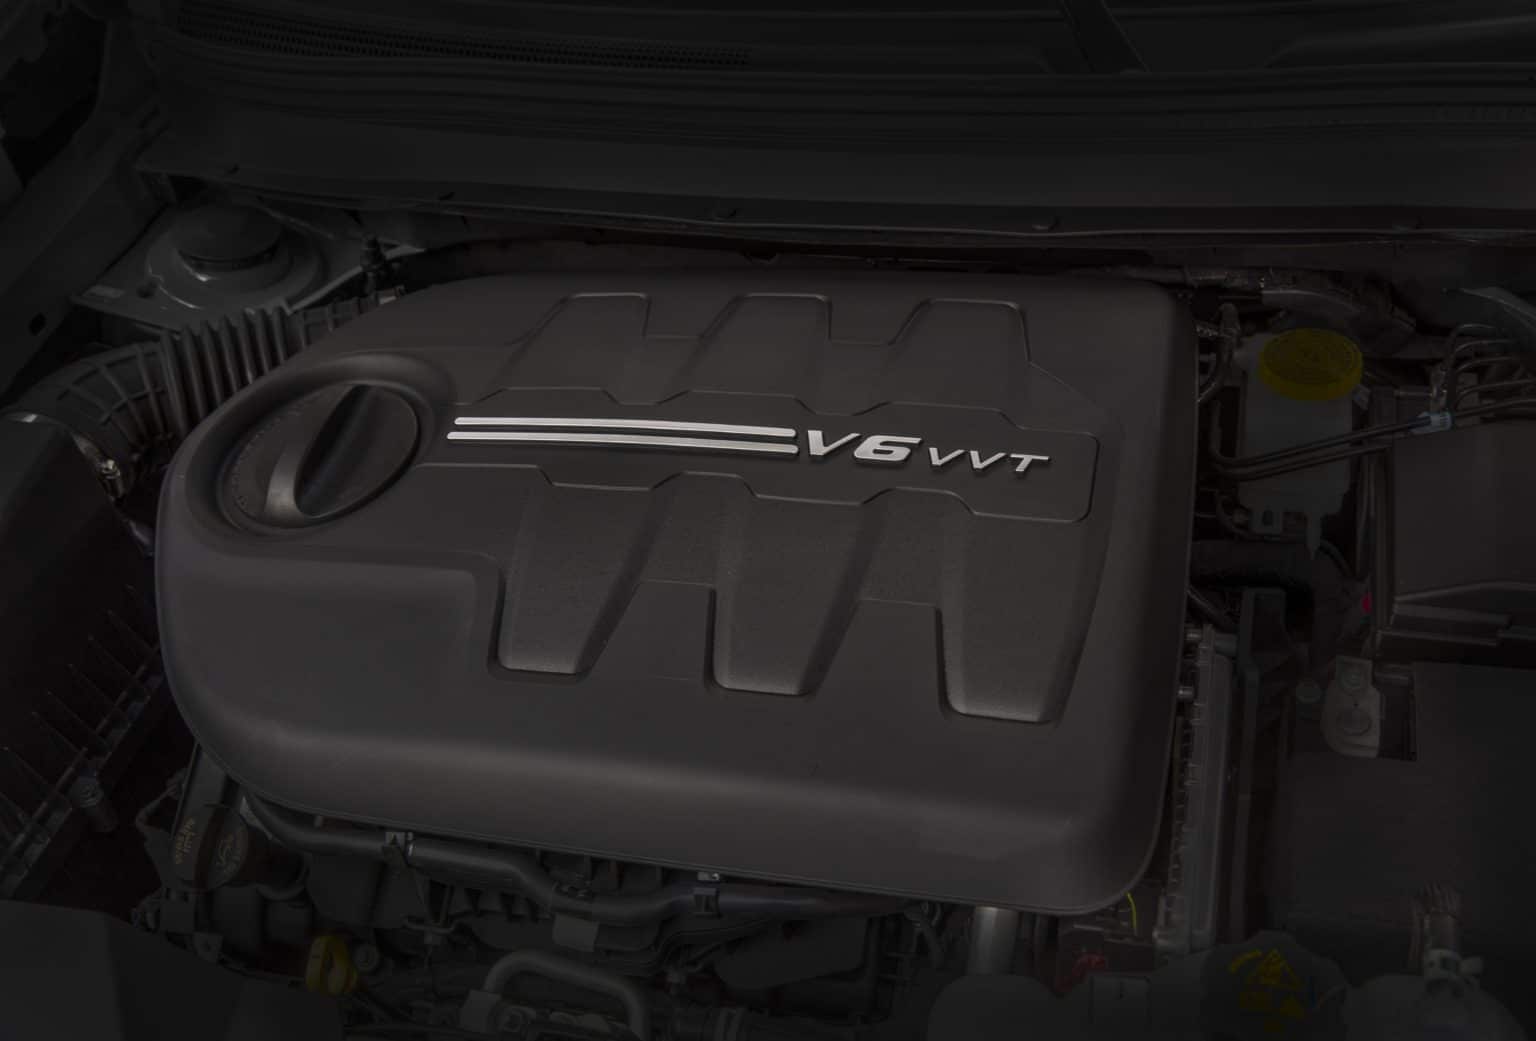 The V6 engine powertrain of the 2022 Jeep Cherokee.